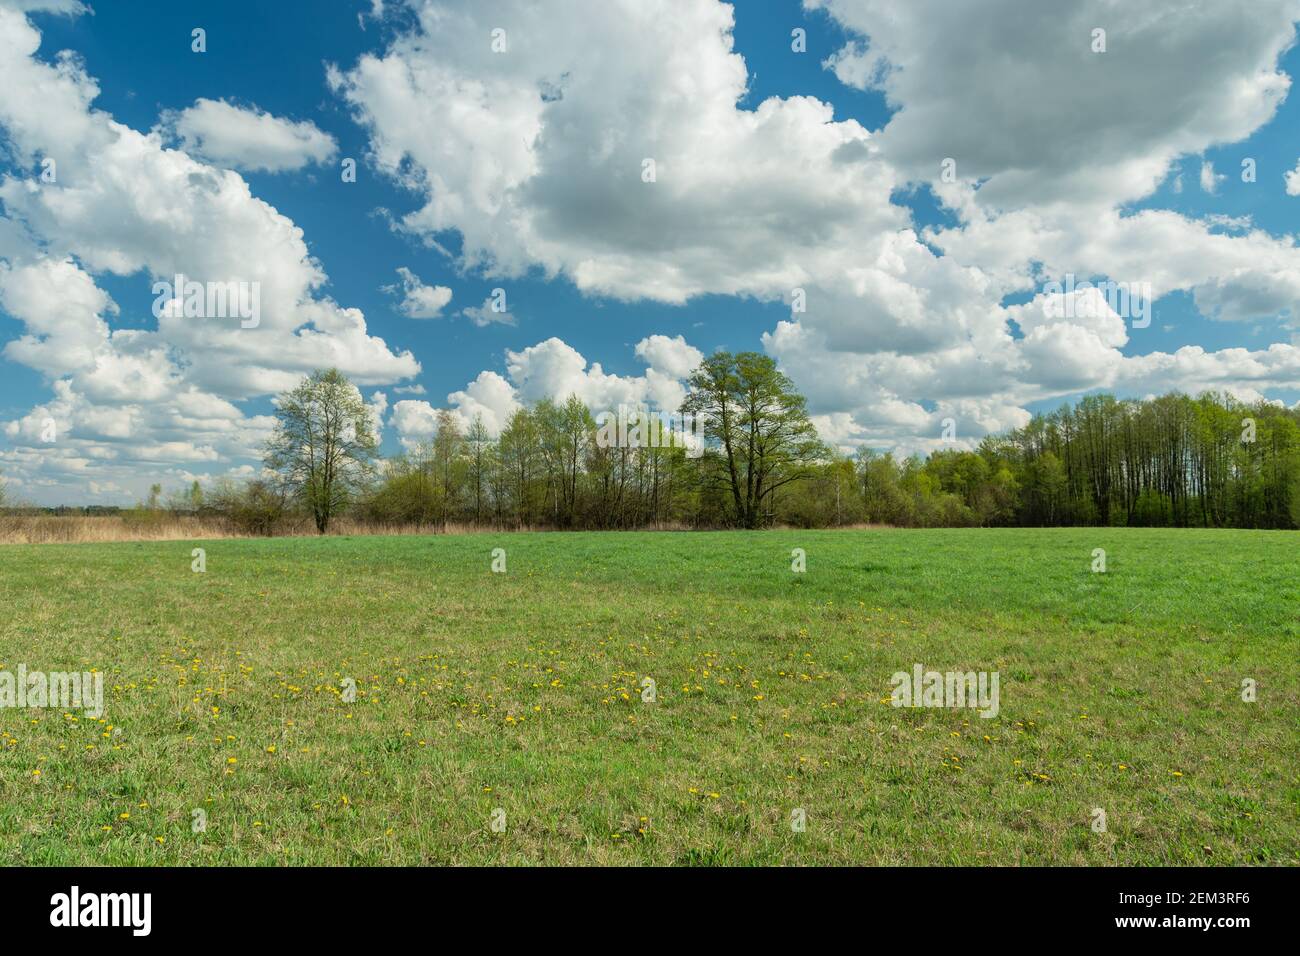 Mai grüne Wiese, Bäume und weiße Wolken gegen den blauen Himmel, Frühlingslandschaft Stockfoto